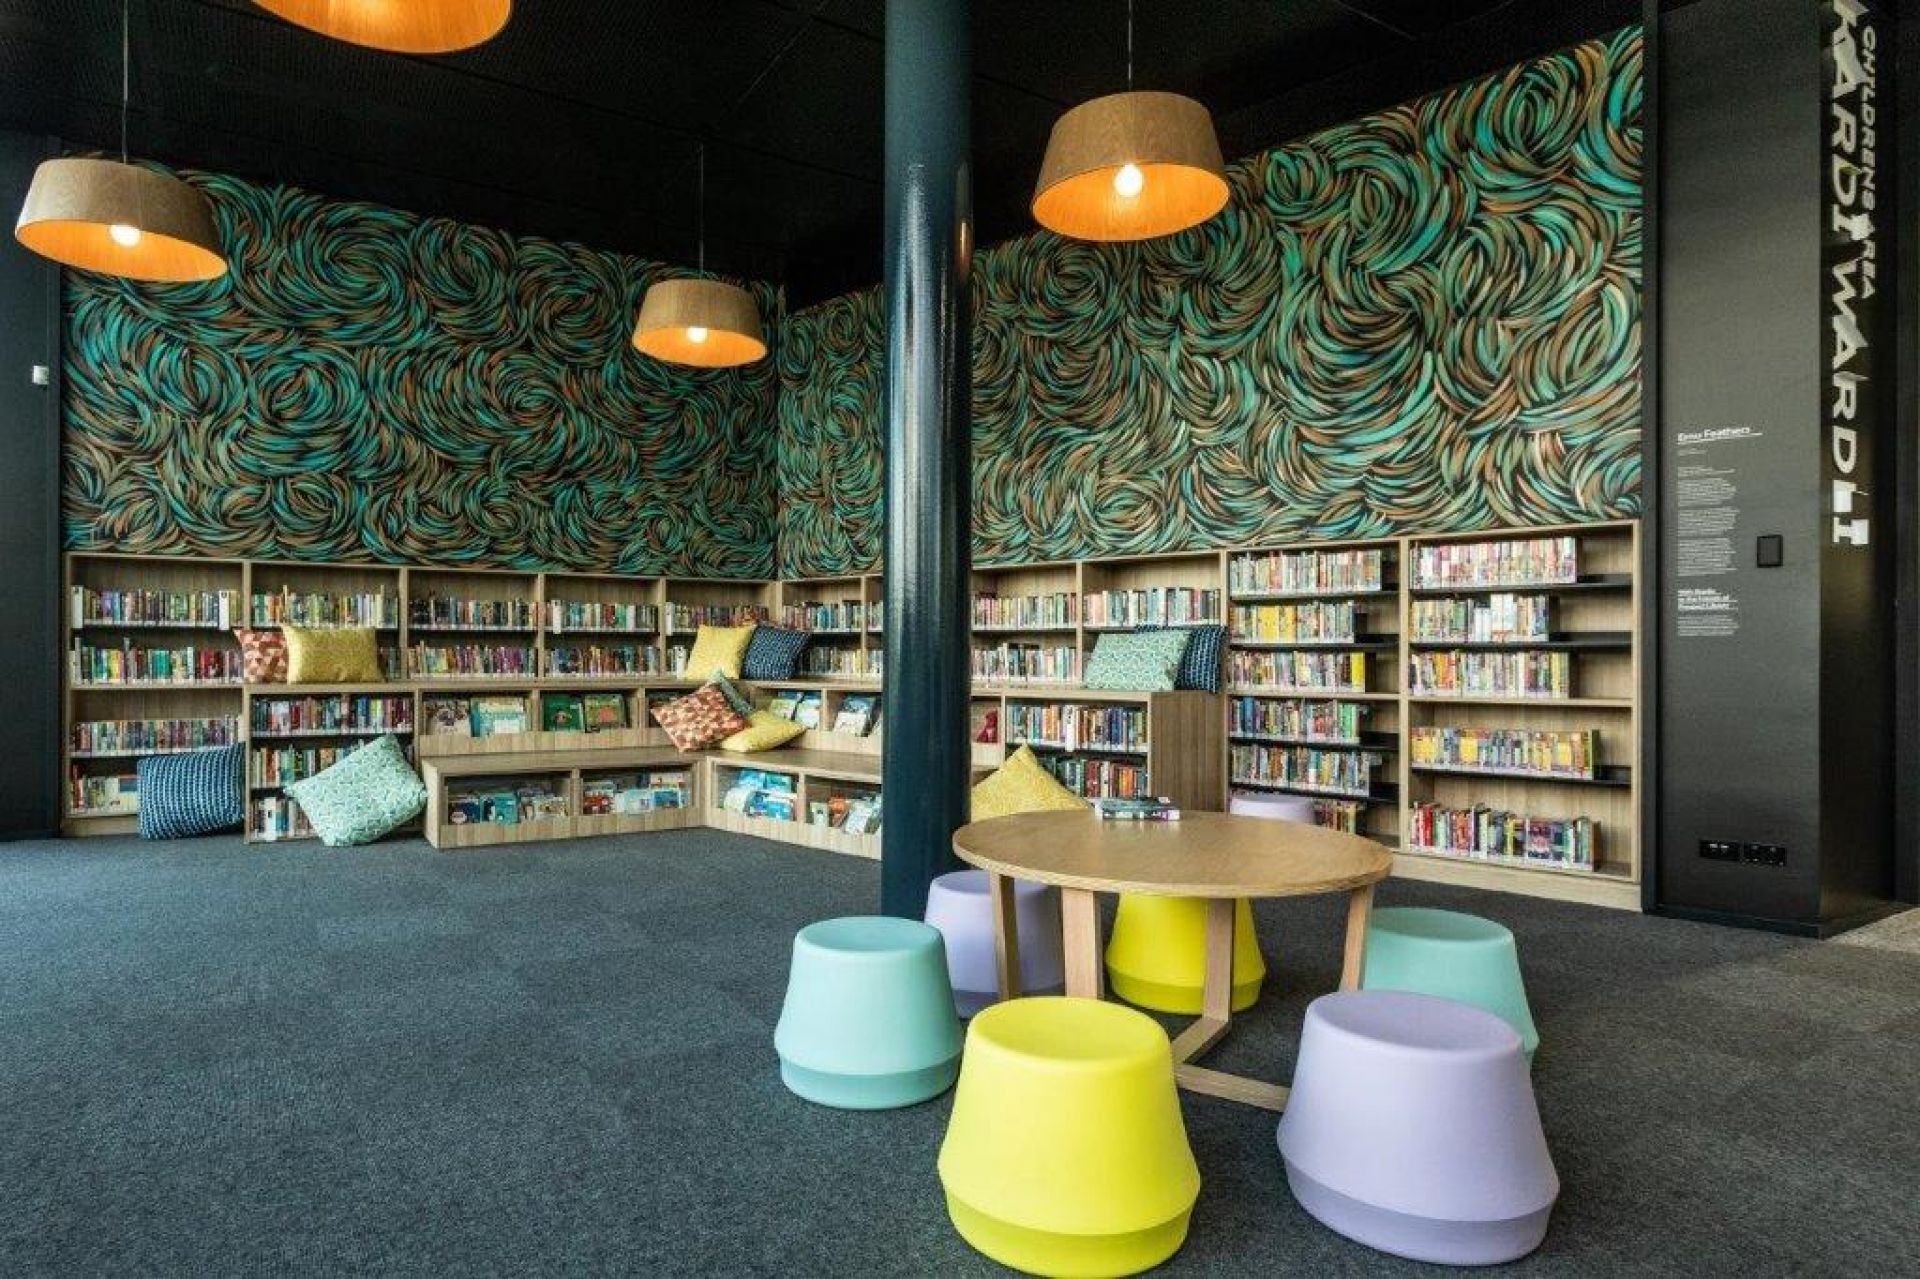 Library children's area